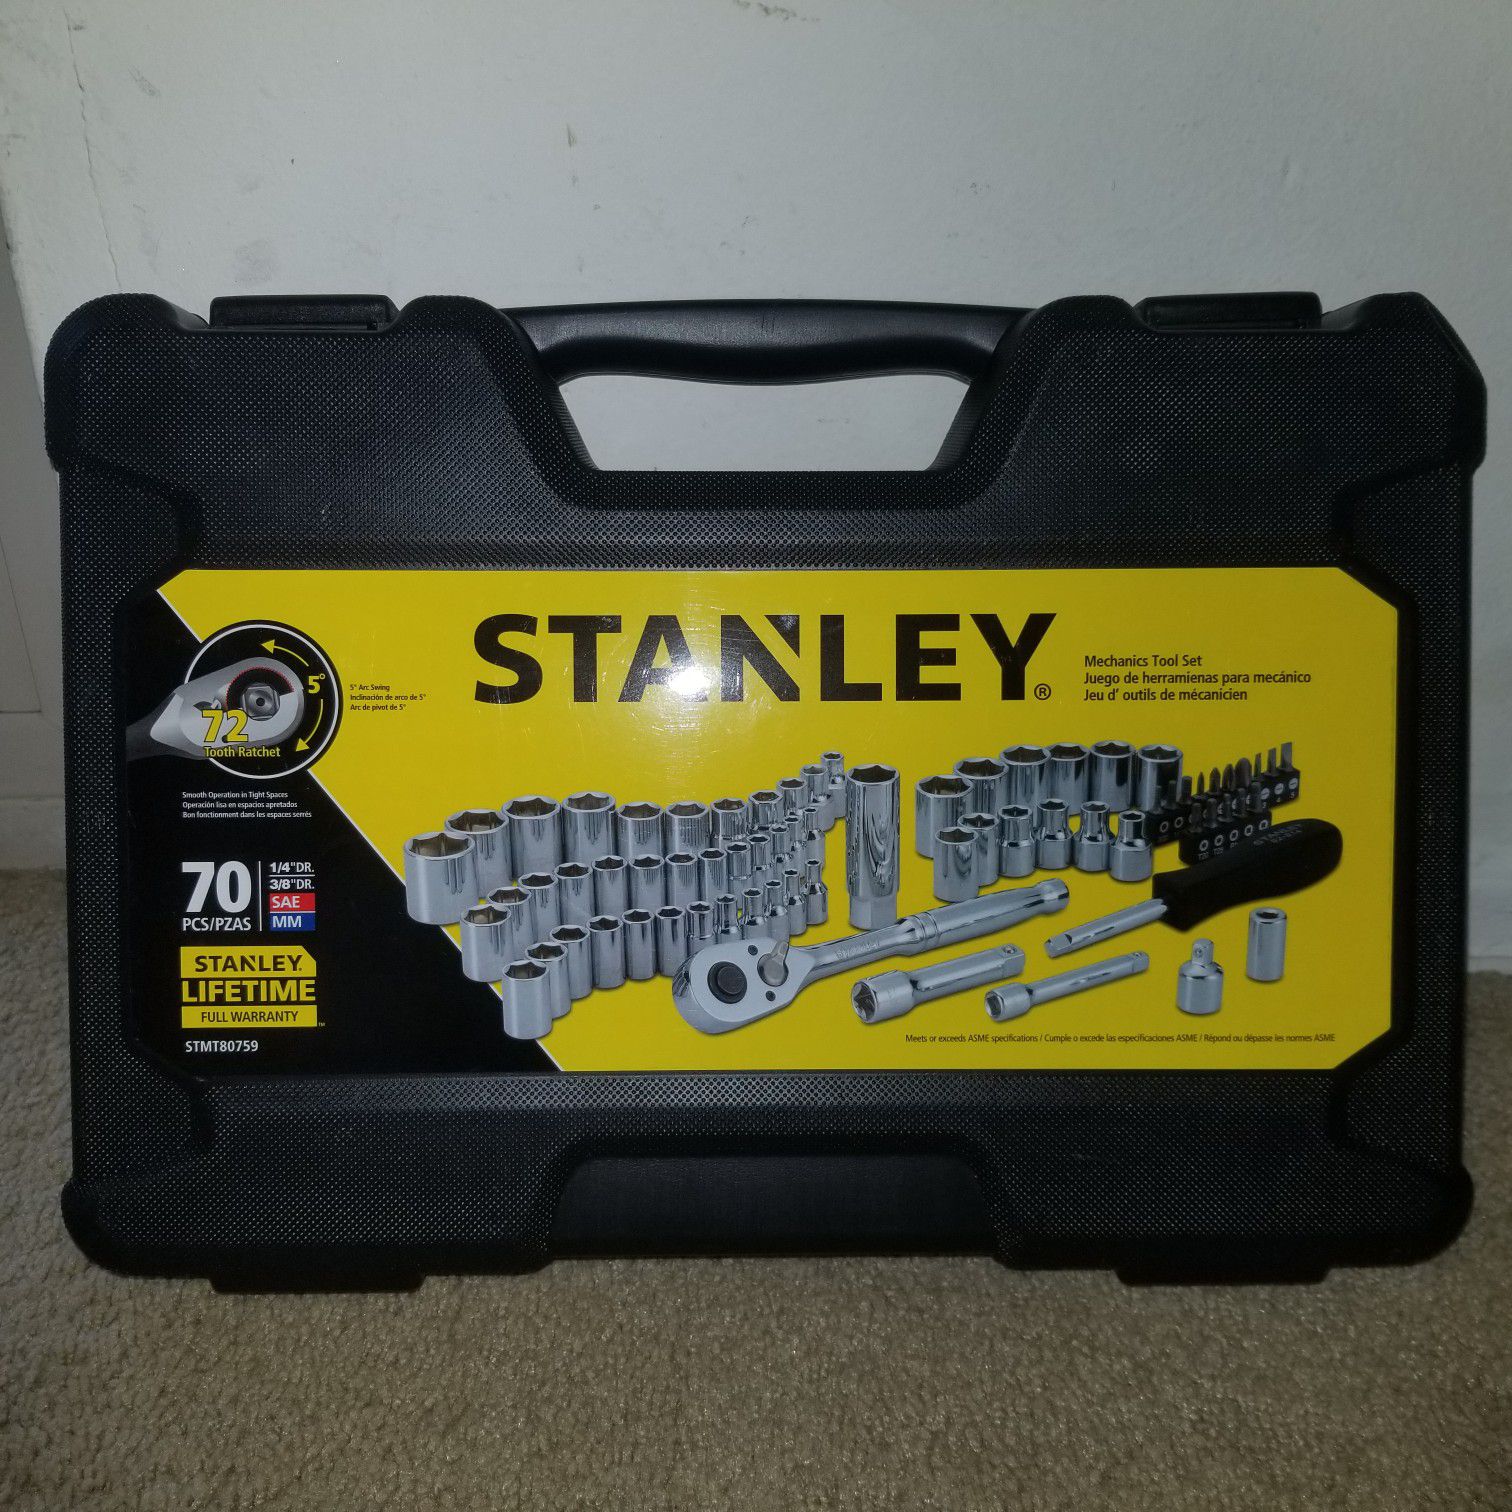 Brand new Stanley Mechanic tool set